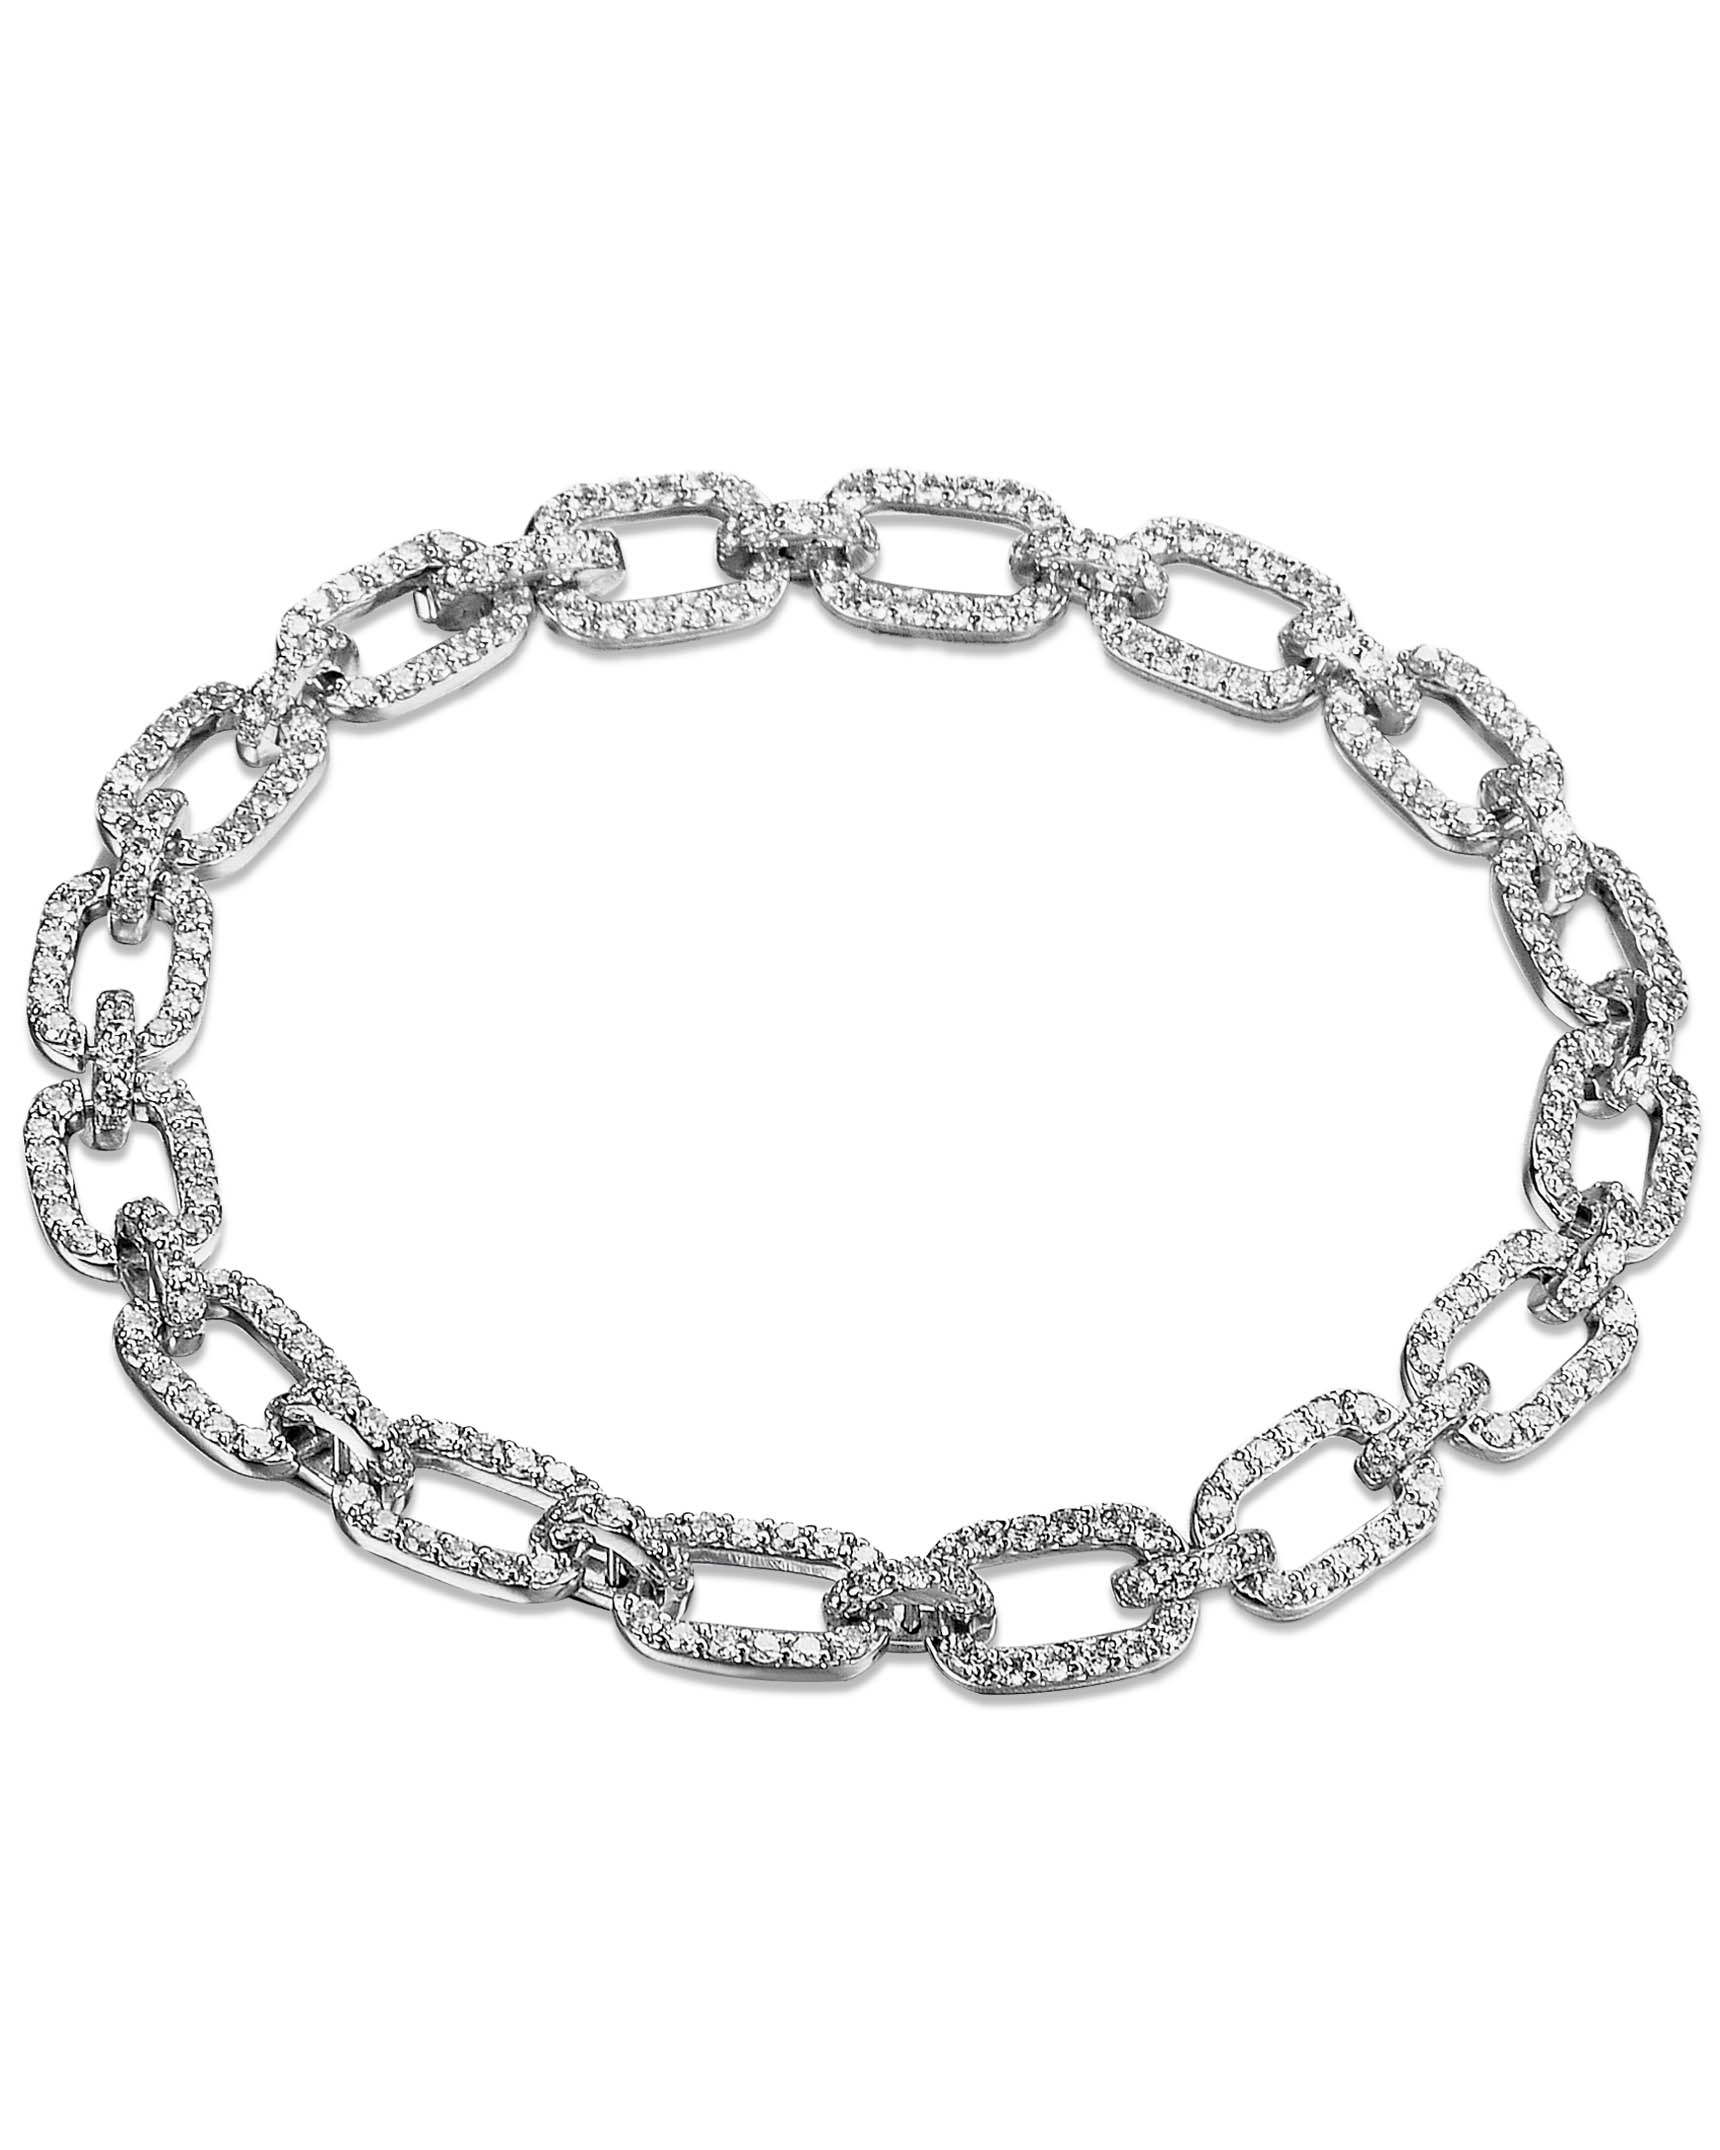 Pavé Diamond and White Gold Link Bracelet - Turgeon Raine